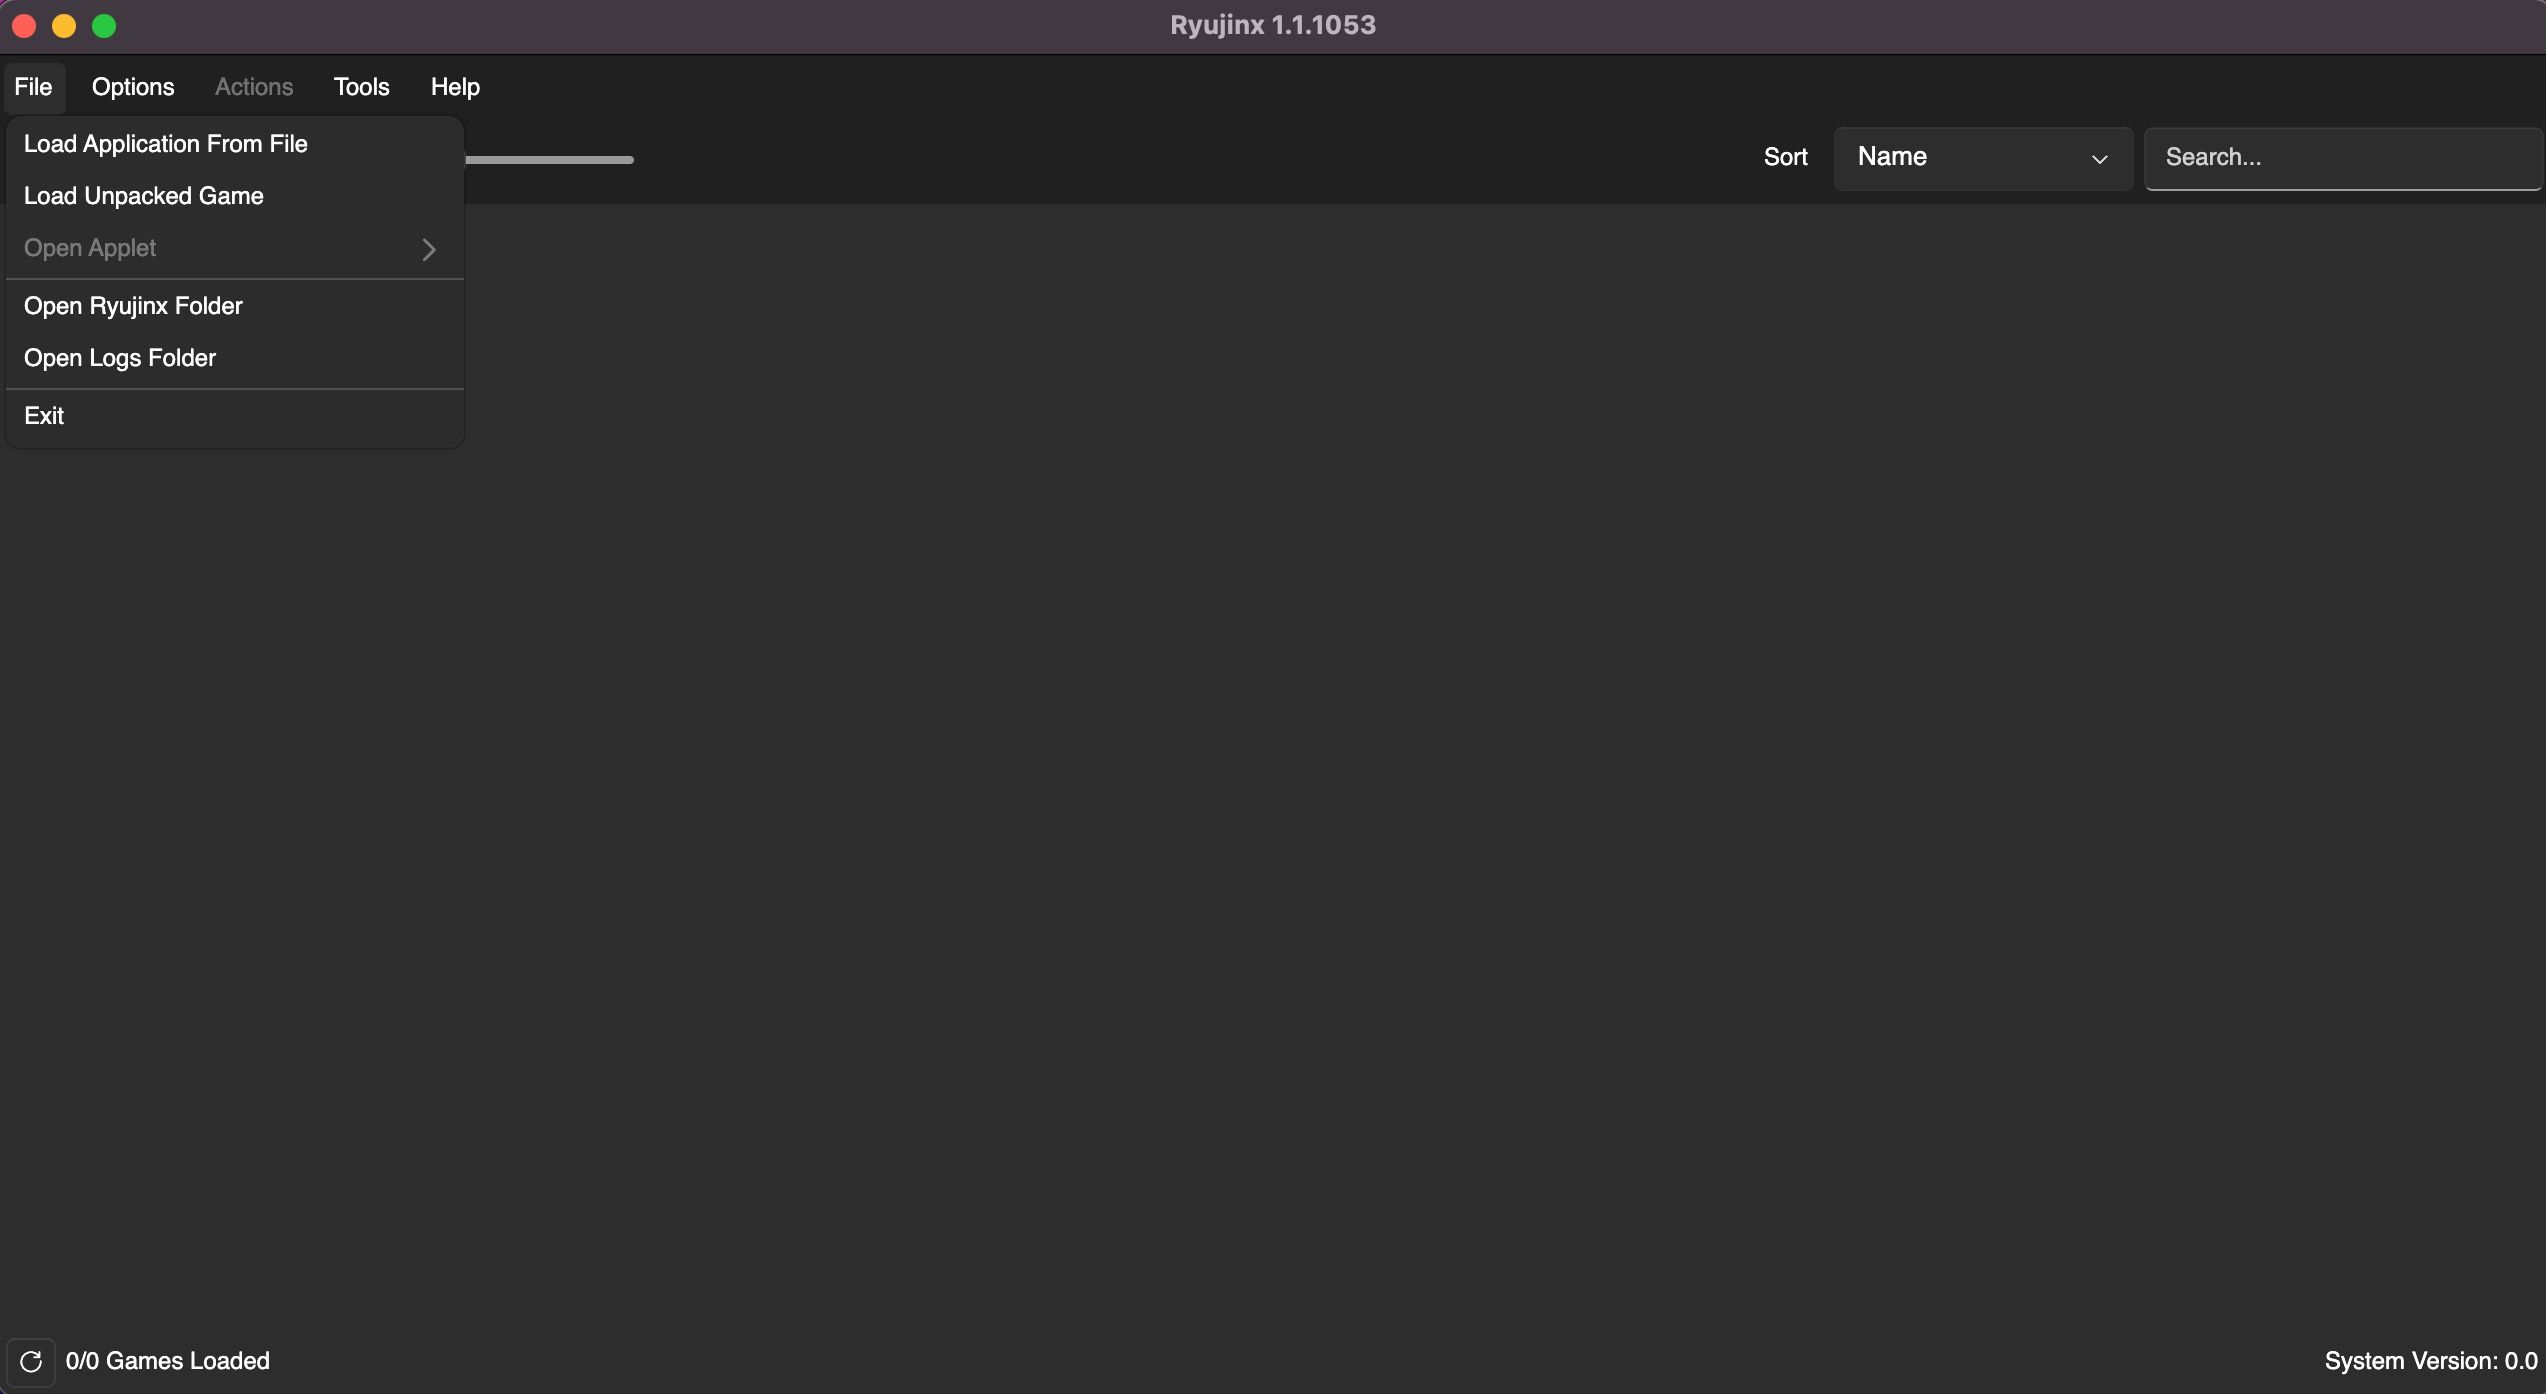 Ryujinx macOS ホームページが開き、Ryujinx を構成するオプションが表示される